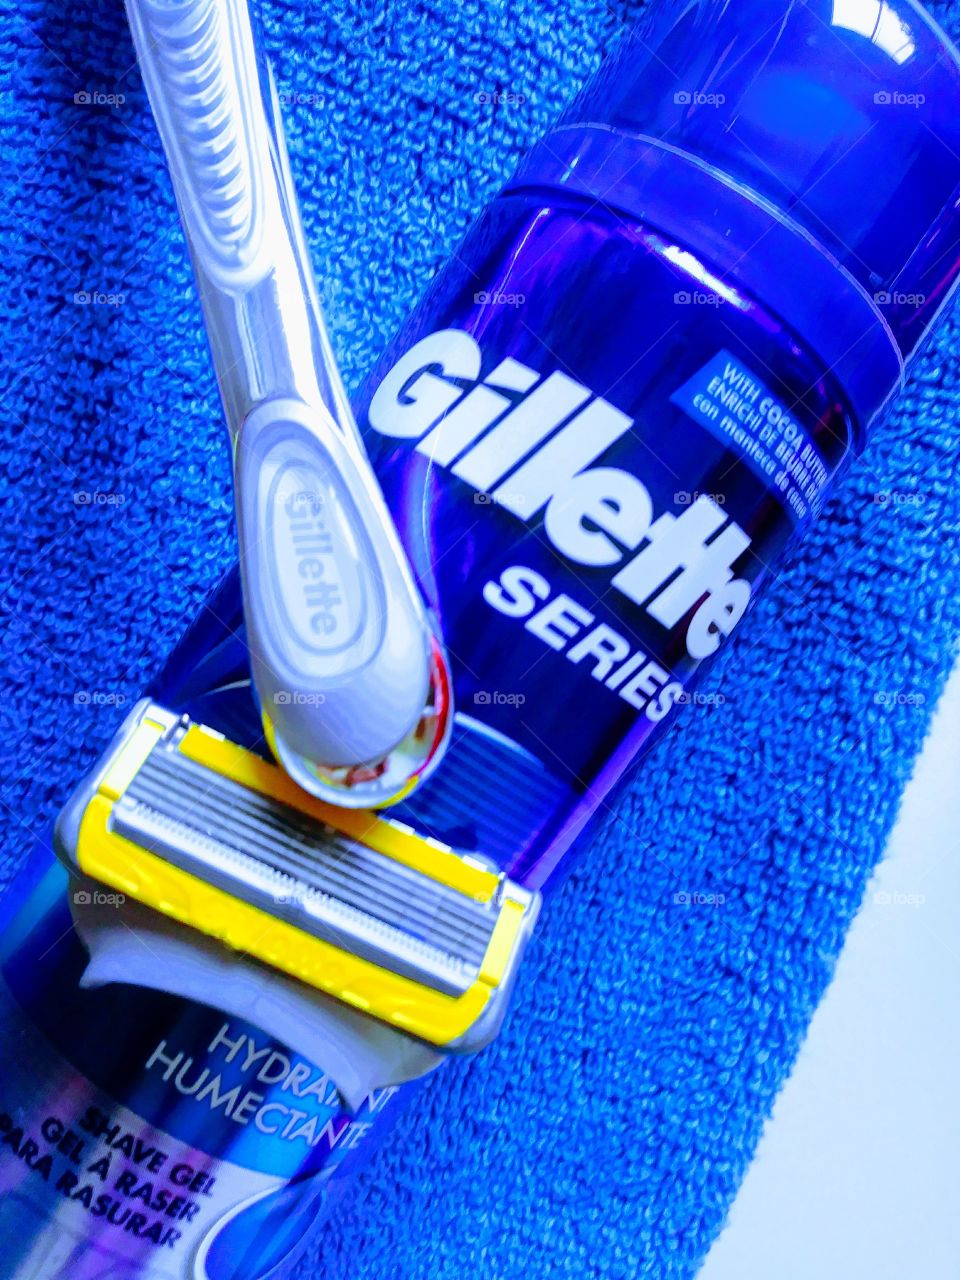 Gillette shaving routine